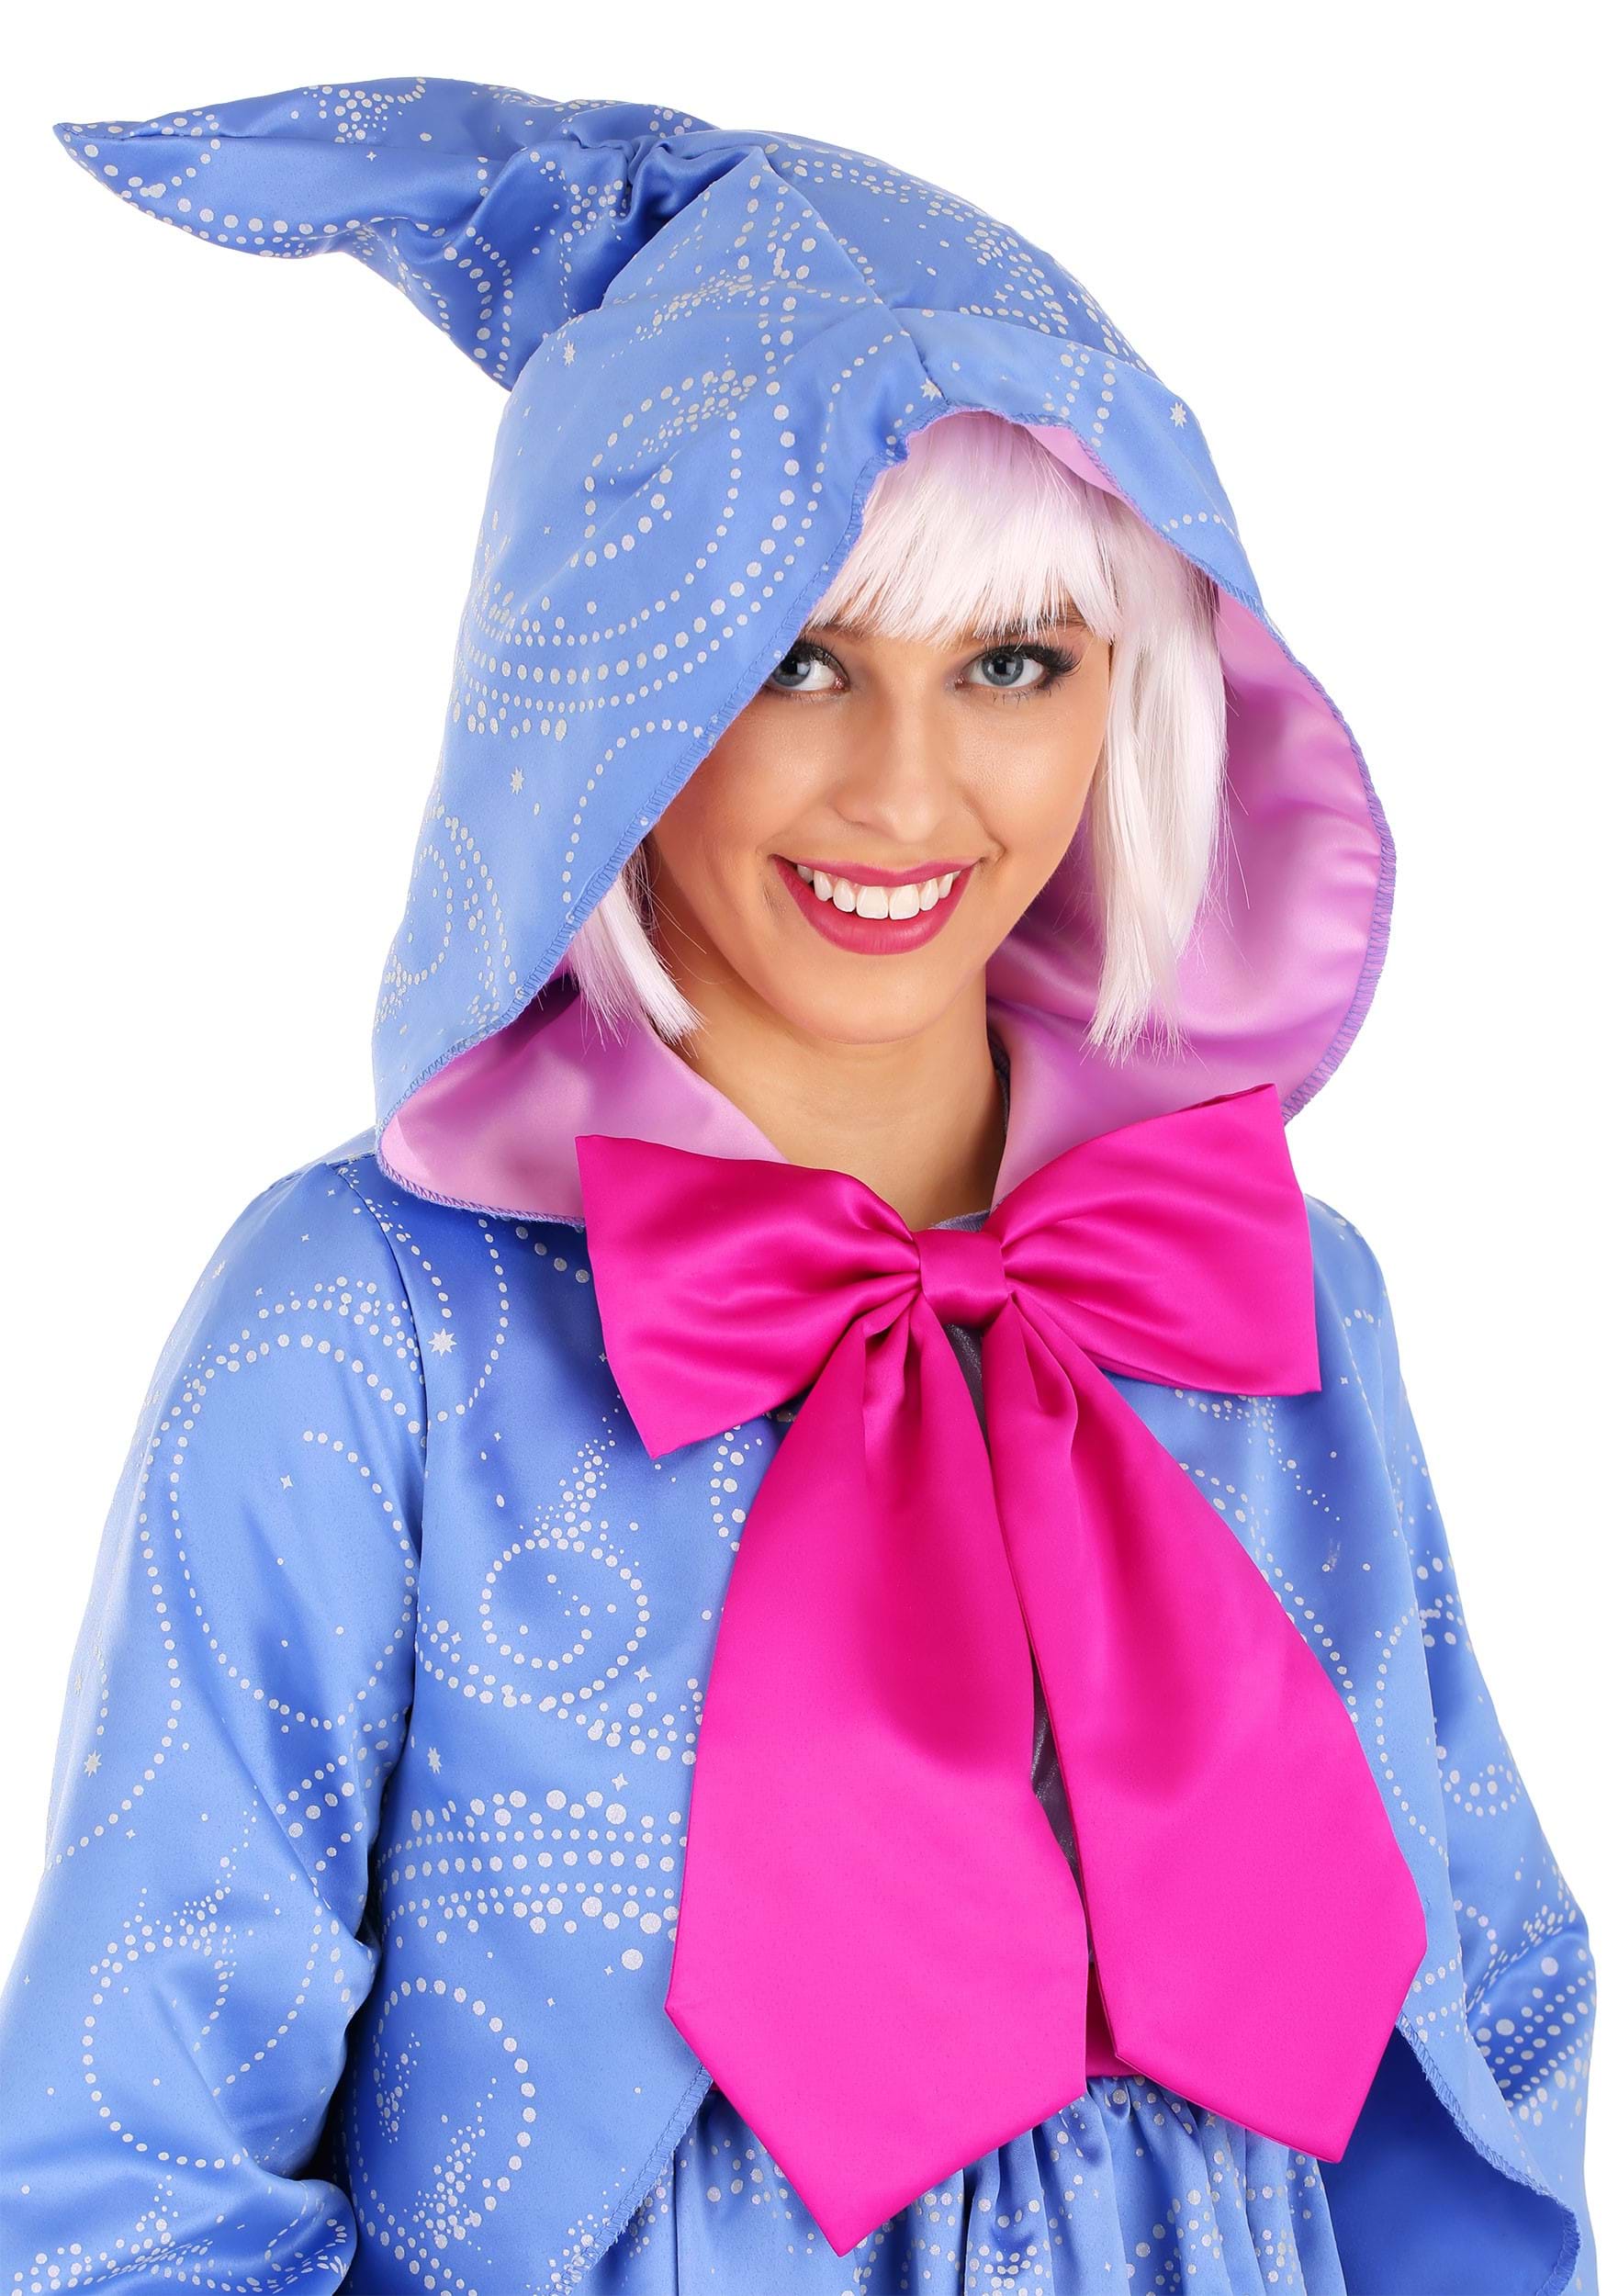 Fairy Godmother Fancy Dress Costume For Women